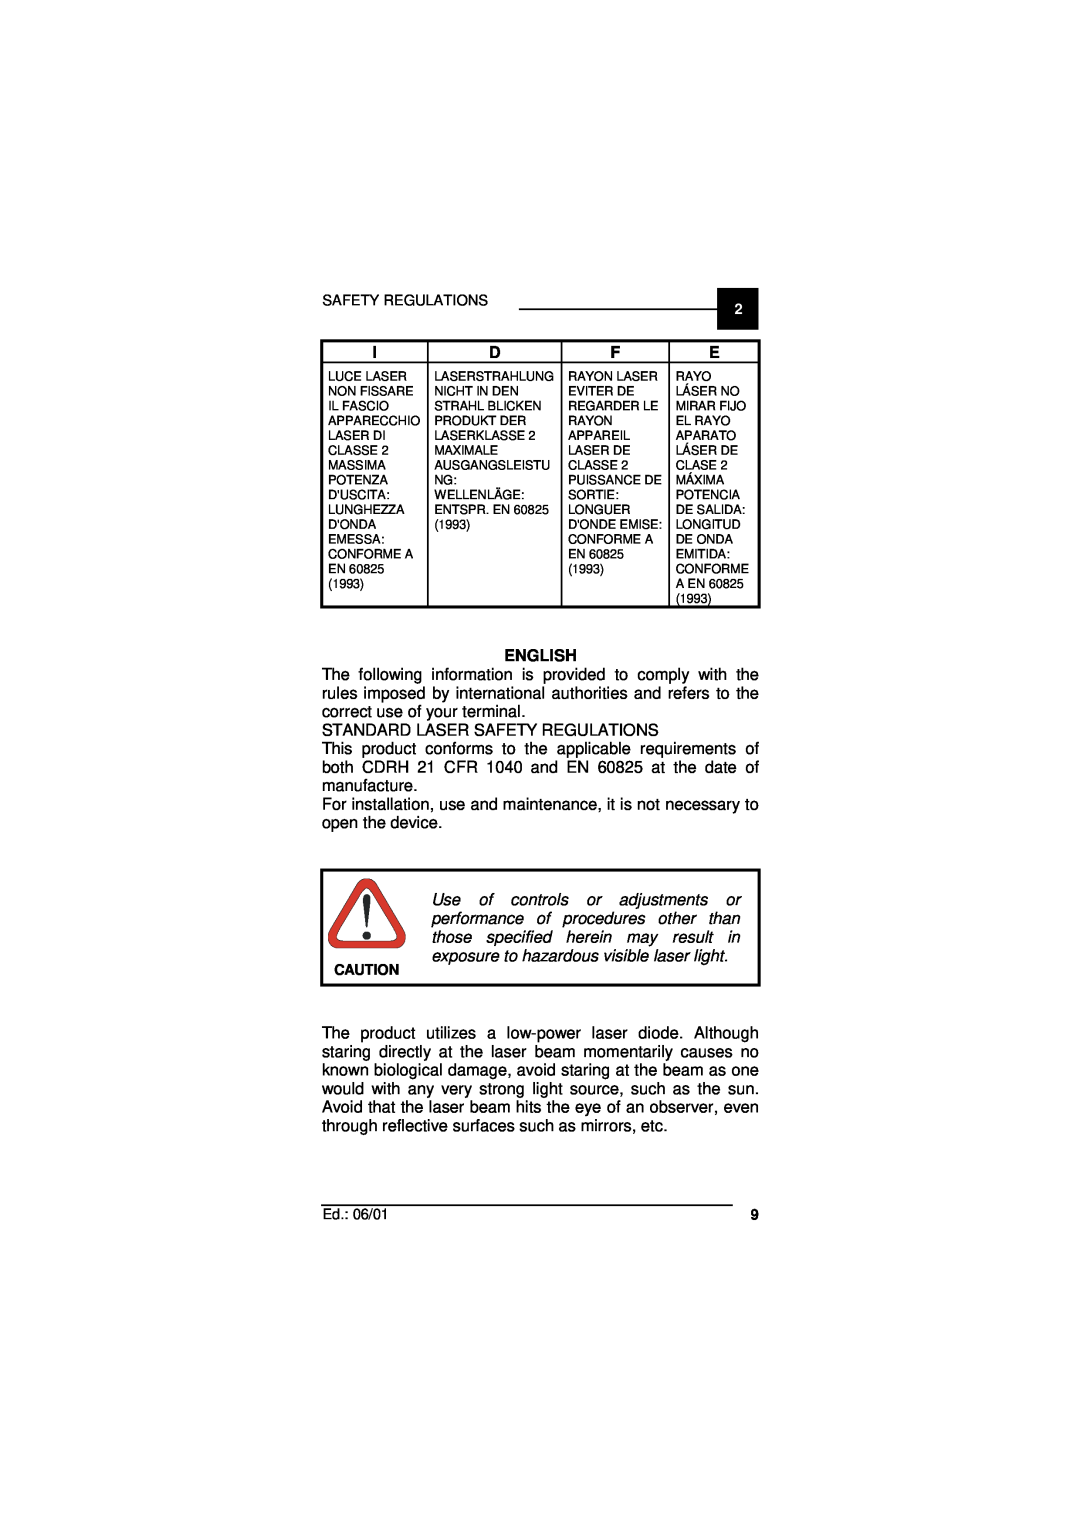 Datalogic Scanning F732 user manual English, Standard Laser Safety Regulations 